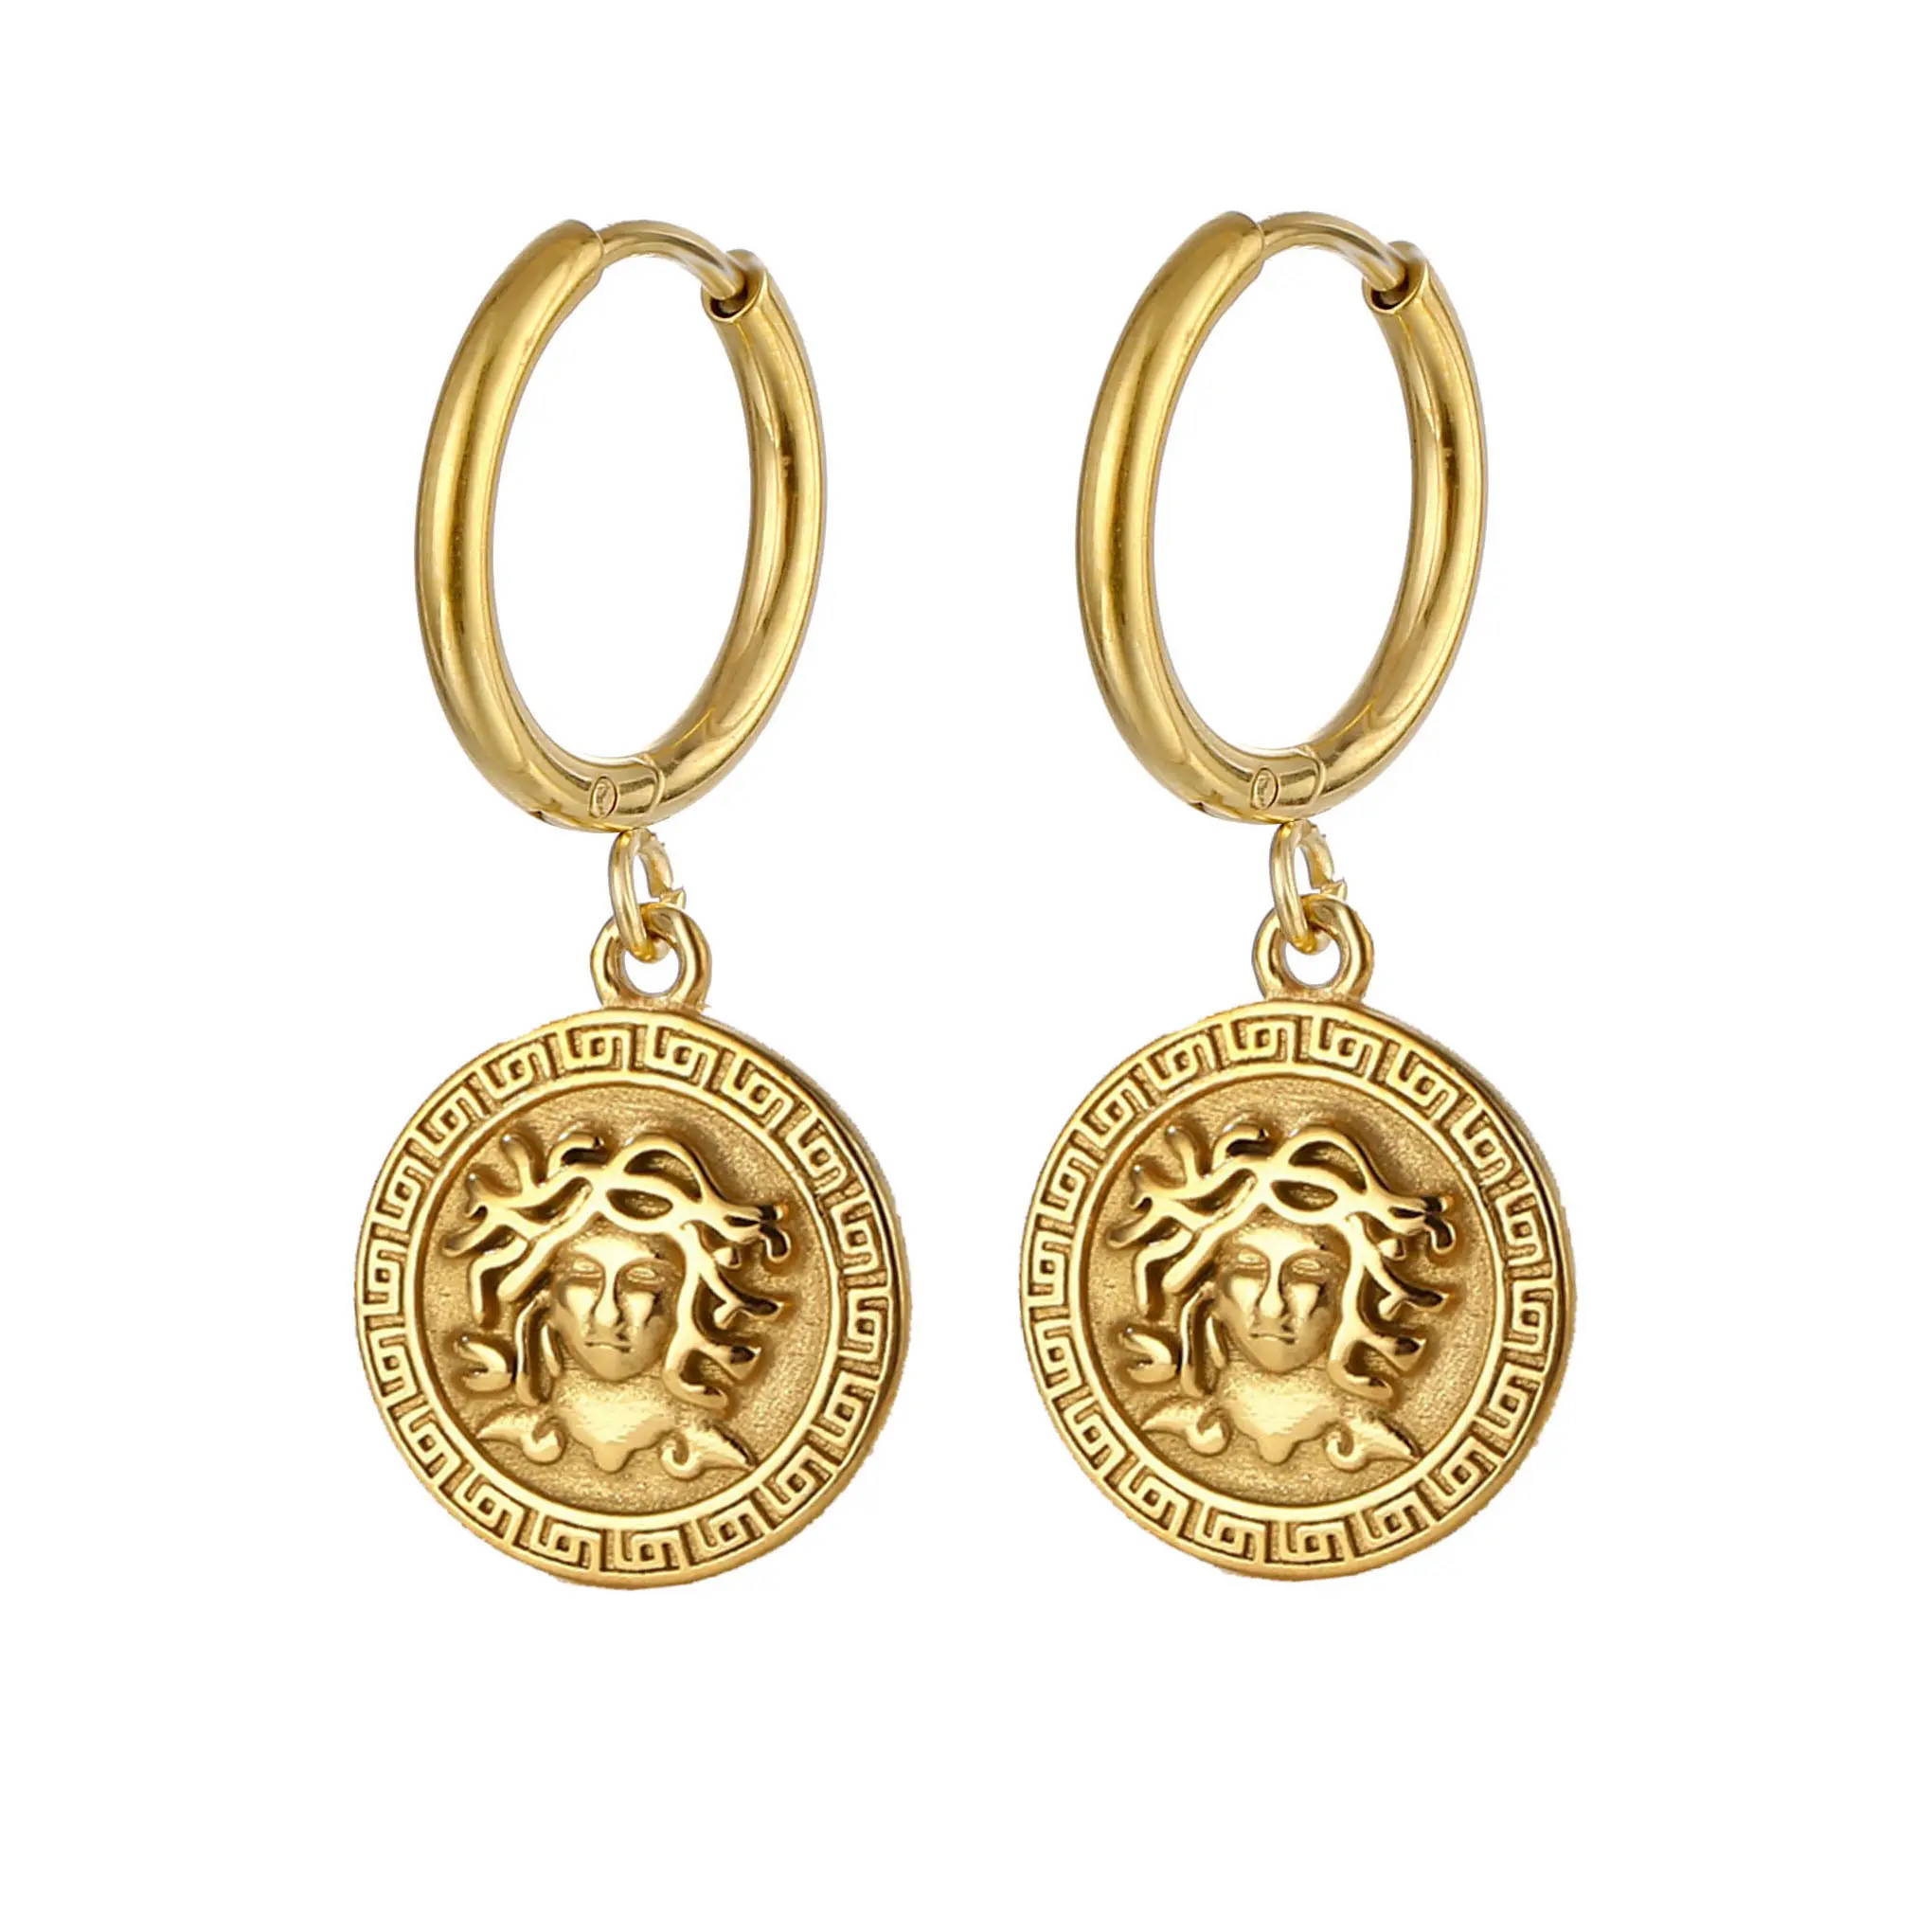 Ready To Ship Tarnish Free Jewellery Gold Silver Hoop Earrings Stainless Steel Medusa Earrings Luxury Famous Brand Jewelry